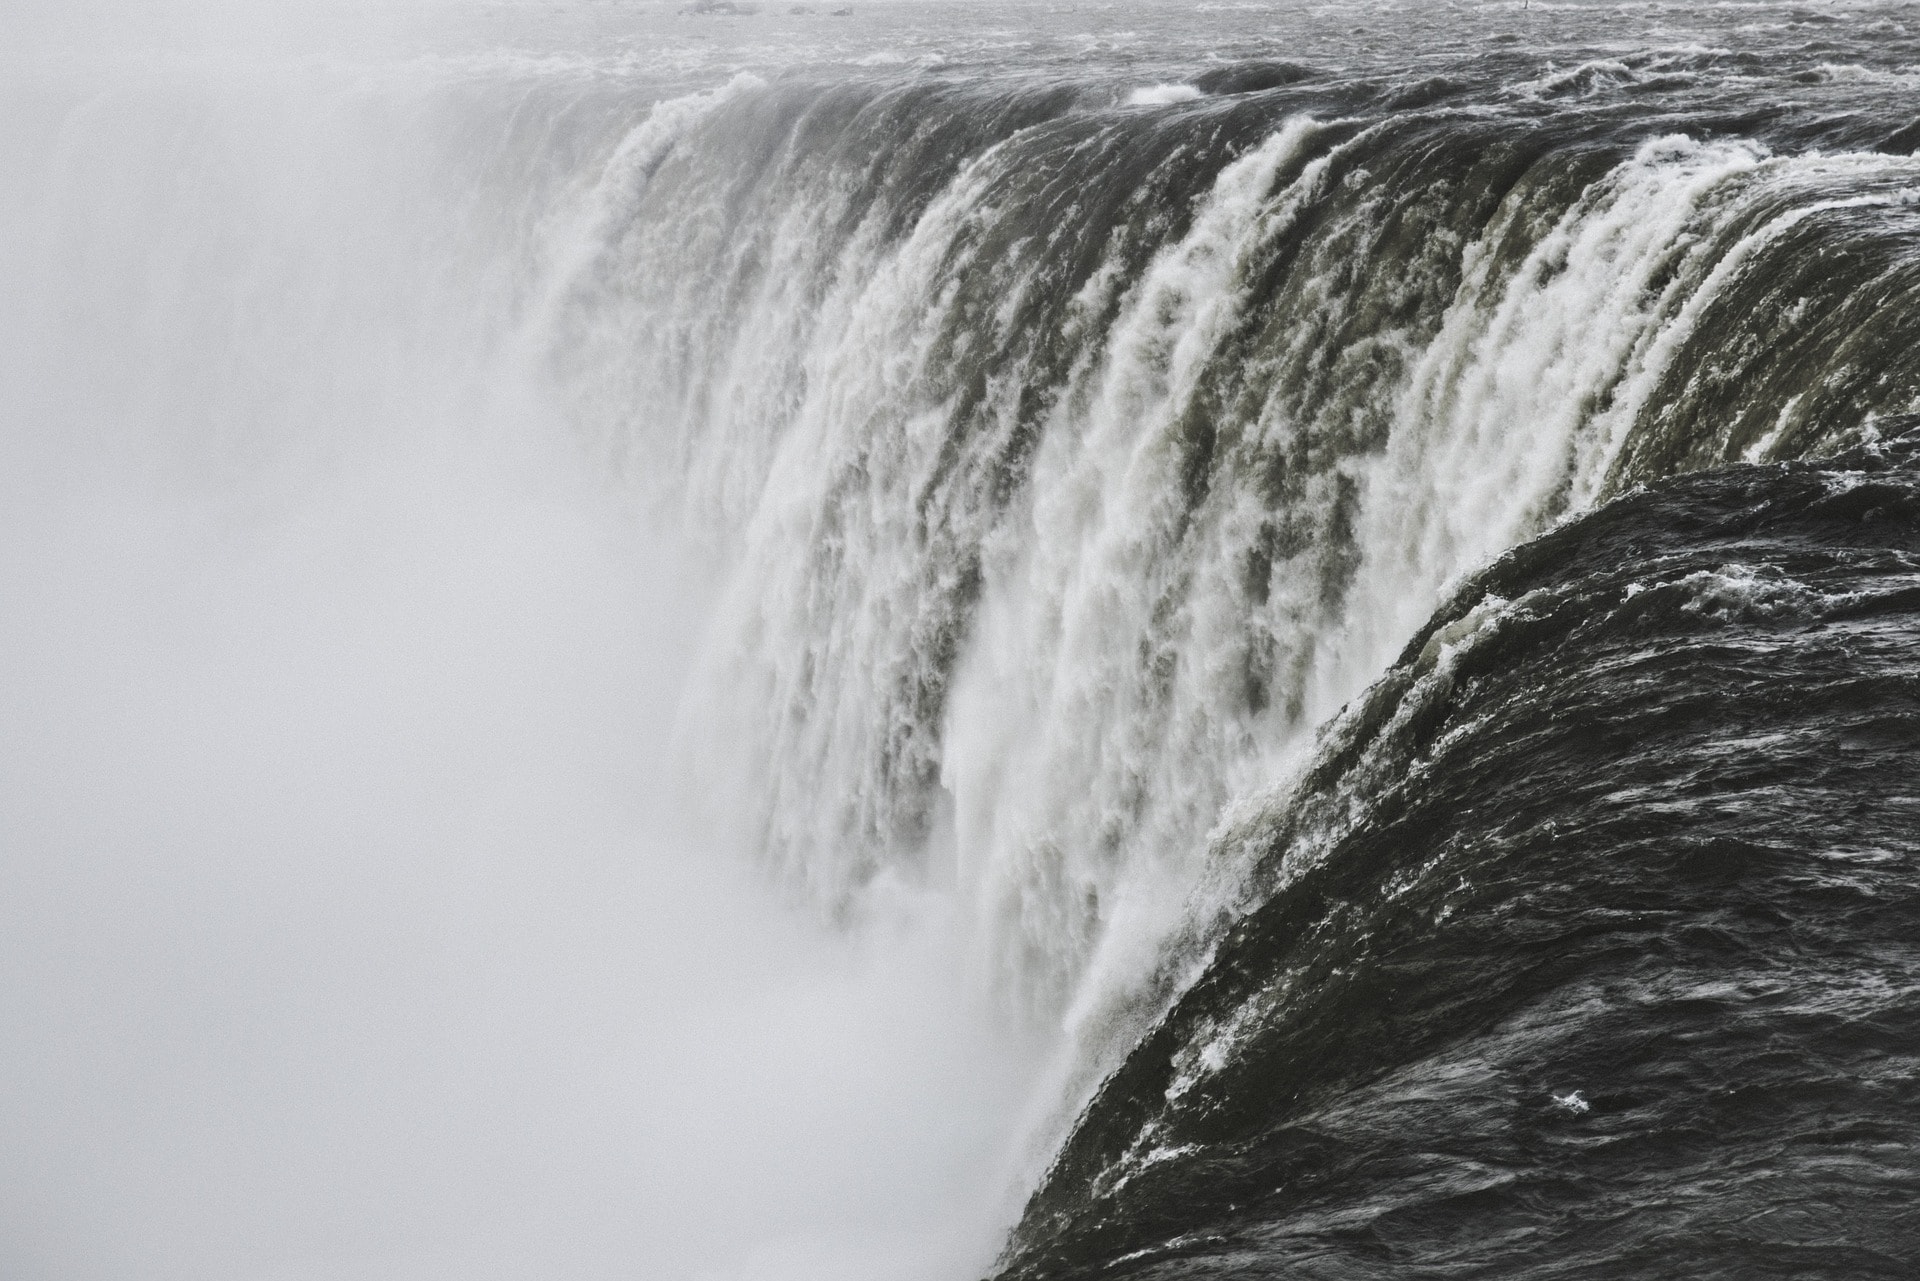 The water flowing over Steelhead Falls